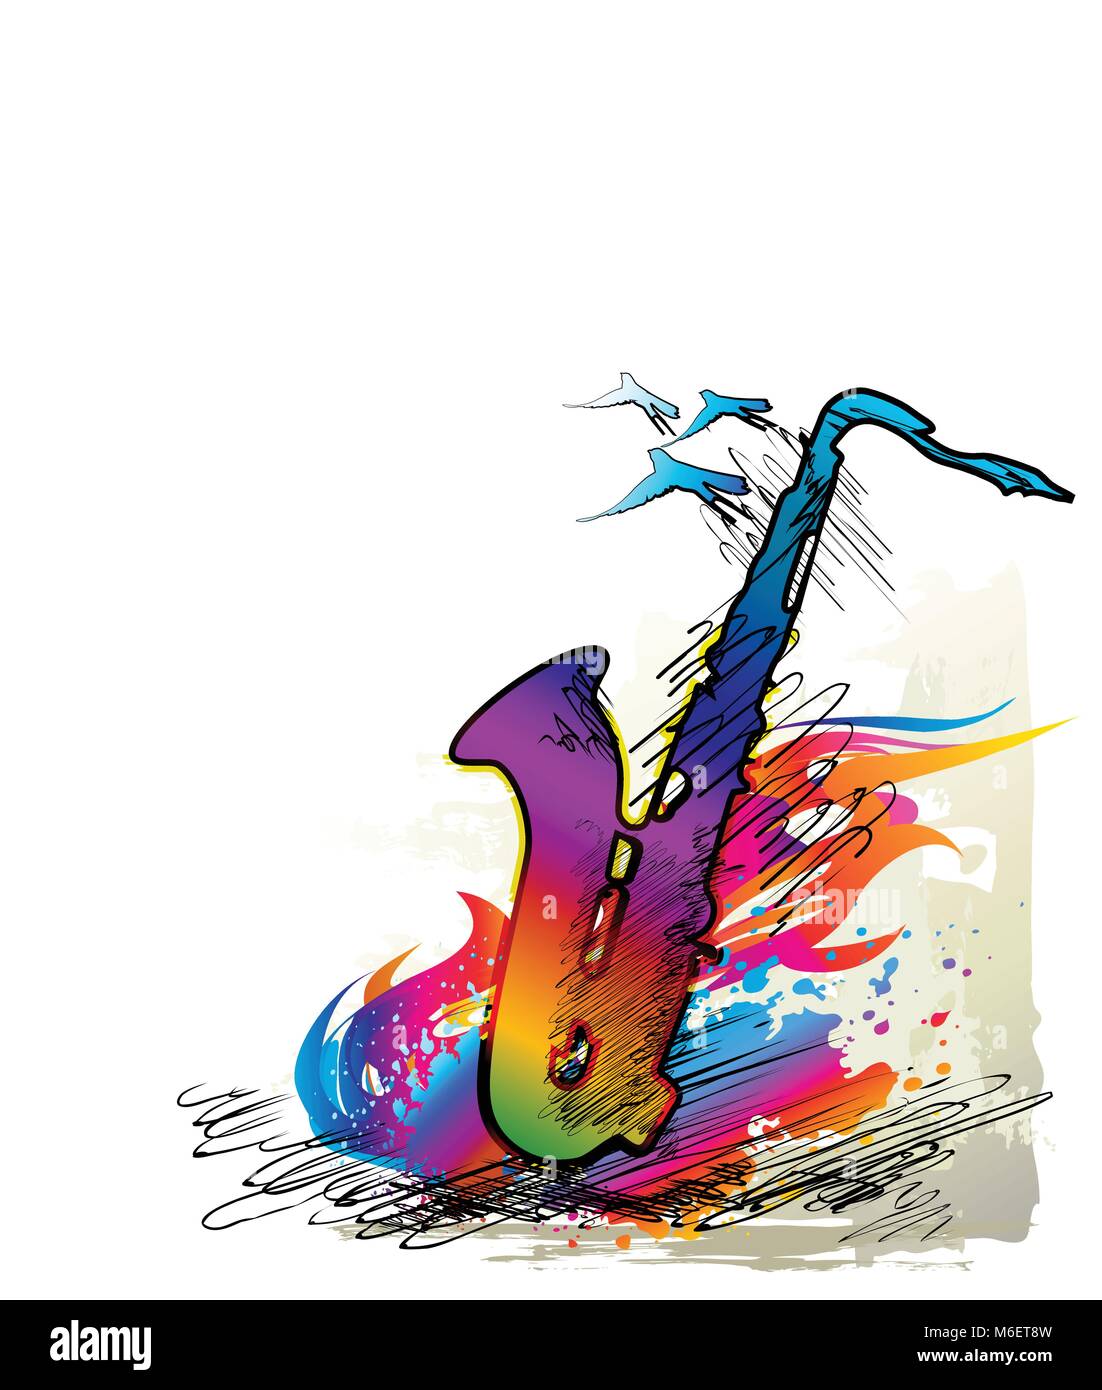 Musik Festival Hintergrund mit Saxophon und Vögel. Bunte vektor Illustration. Digitale Malerei Stock Vektor